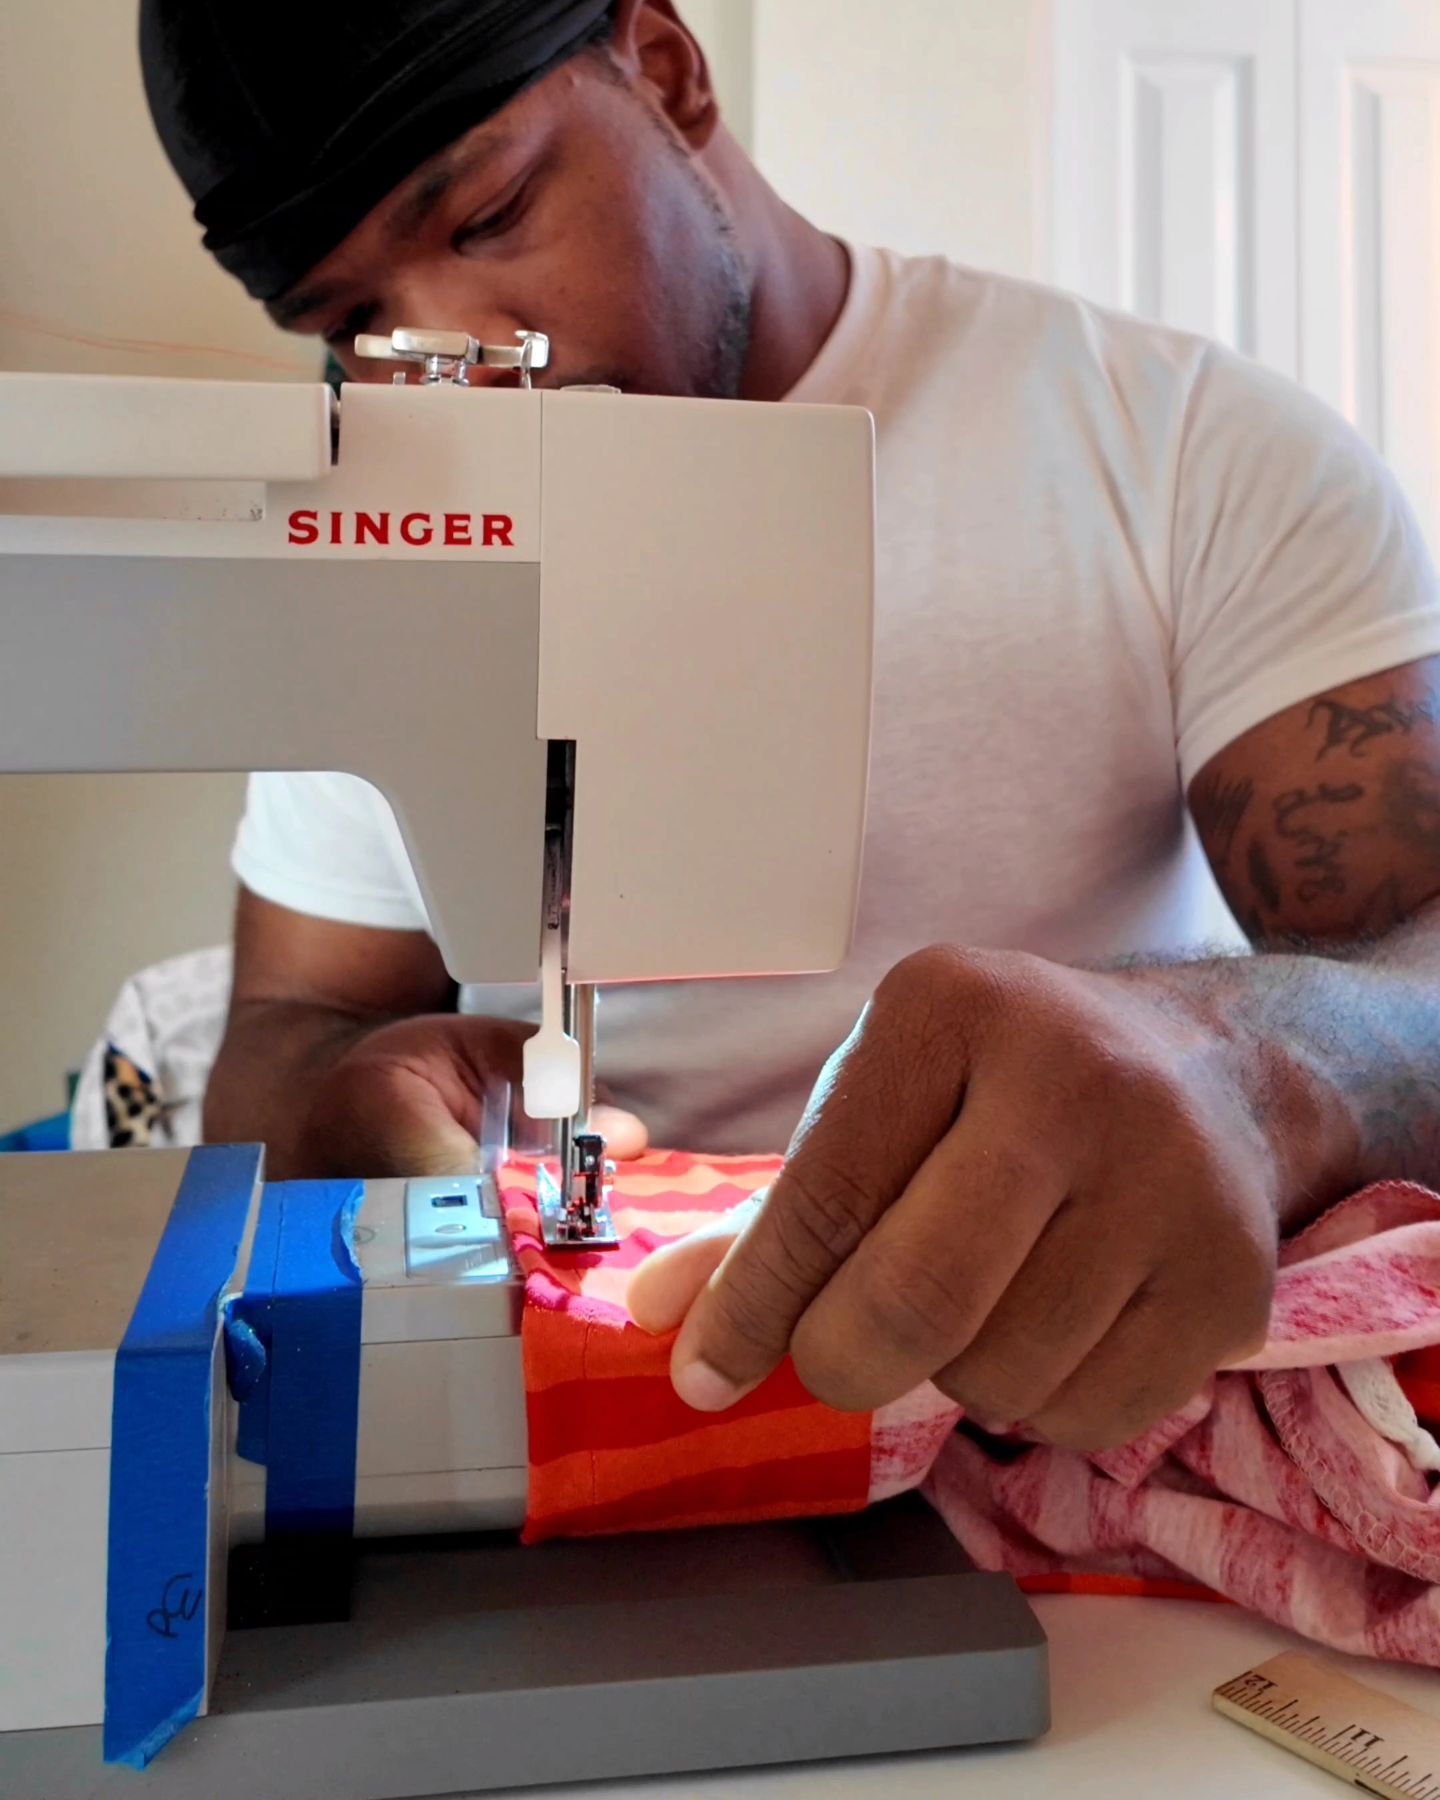 The process of Sewing 🪡🍓🍊➡️
Shorts Now available (Link in my bio)
.
.
.
.
.
#reworked #reworked #clothing
#reworkedfashion #bandanatotebag
#fashioninspo
#chicagofashiondesigner #sewing
#sewingtips #sewingproject #shortshorts